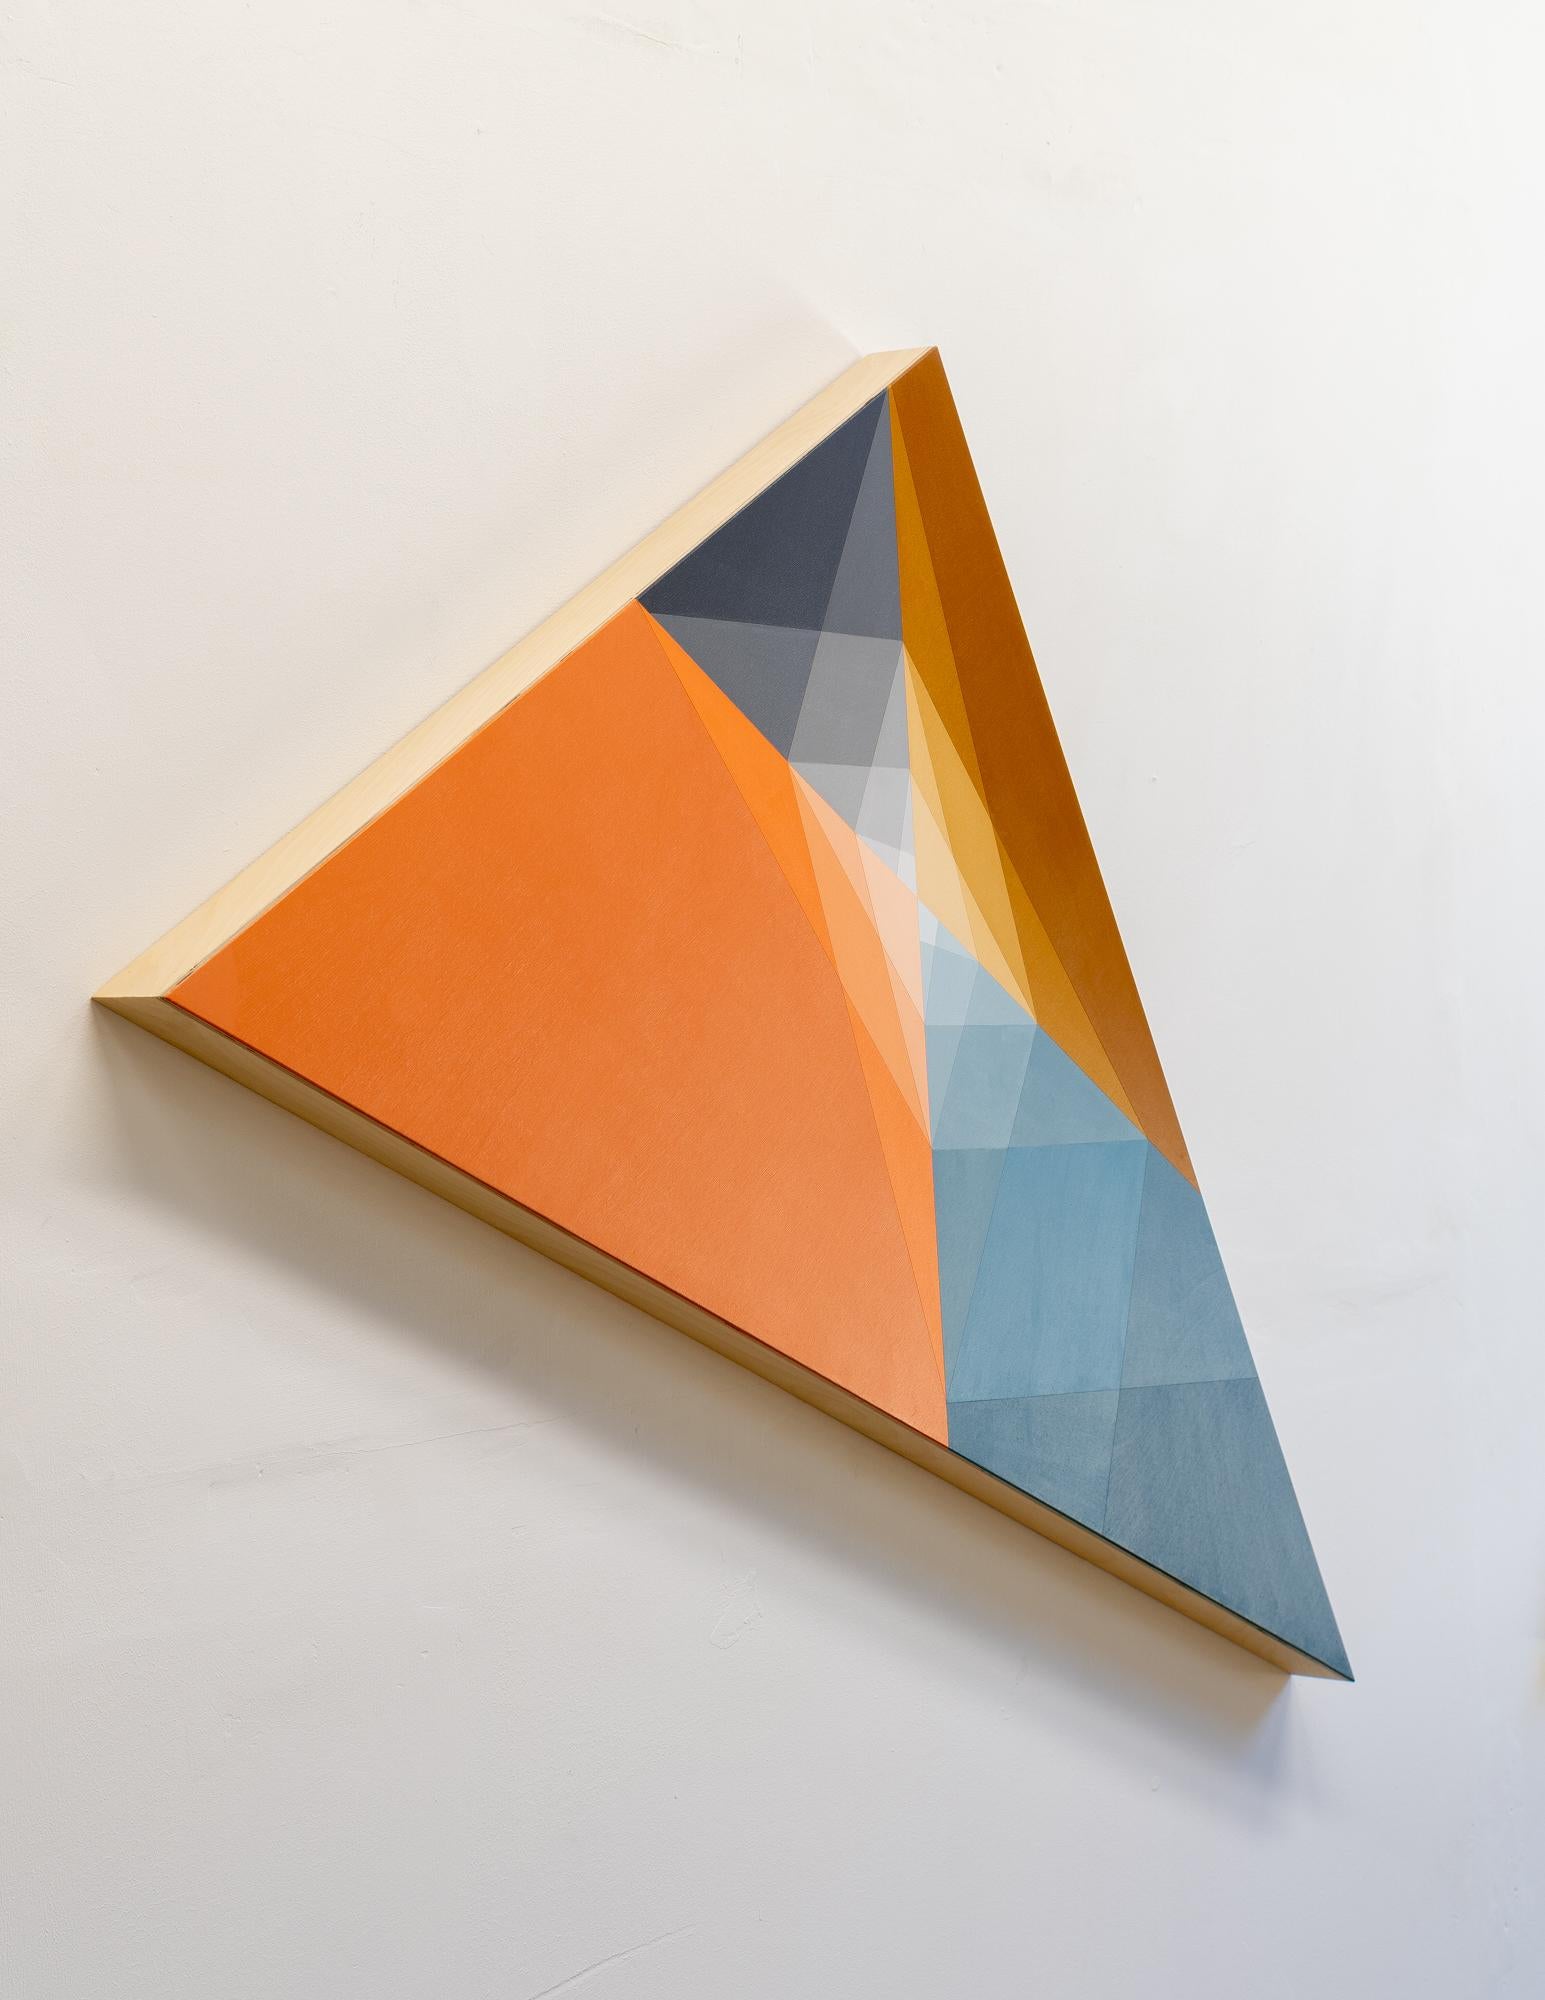 SUNDOG 21 - Triangular Geometric Abstract Painting Inspired by Sundogs & Nature For Sale 1